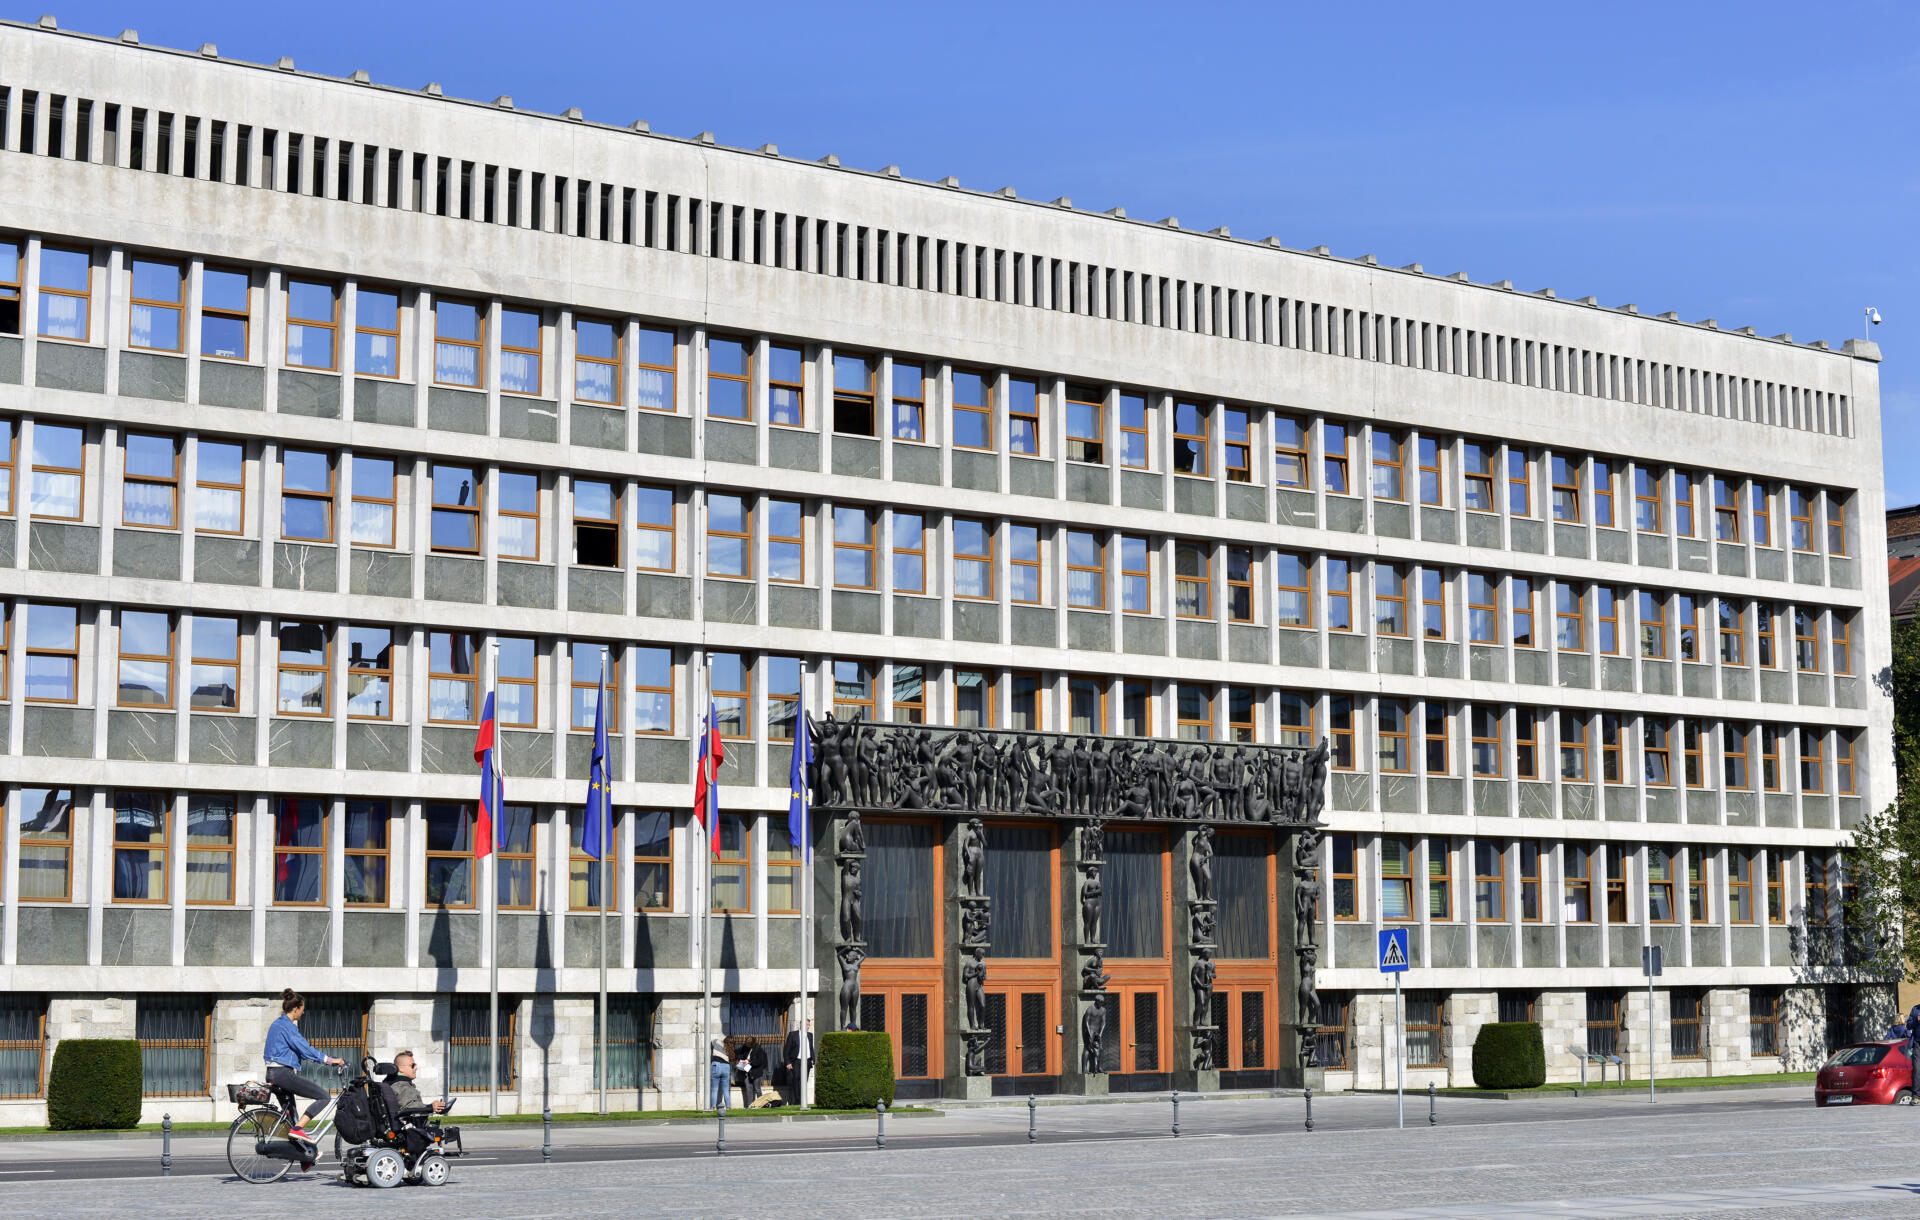 Ljubljana, Slovenia - October 4, 2019: The facade of the Slovenian Parliament.